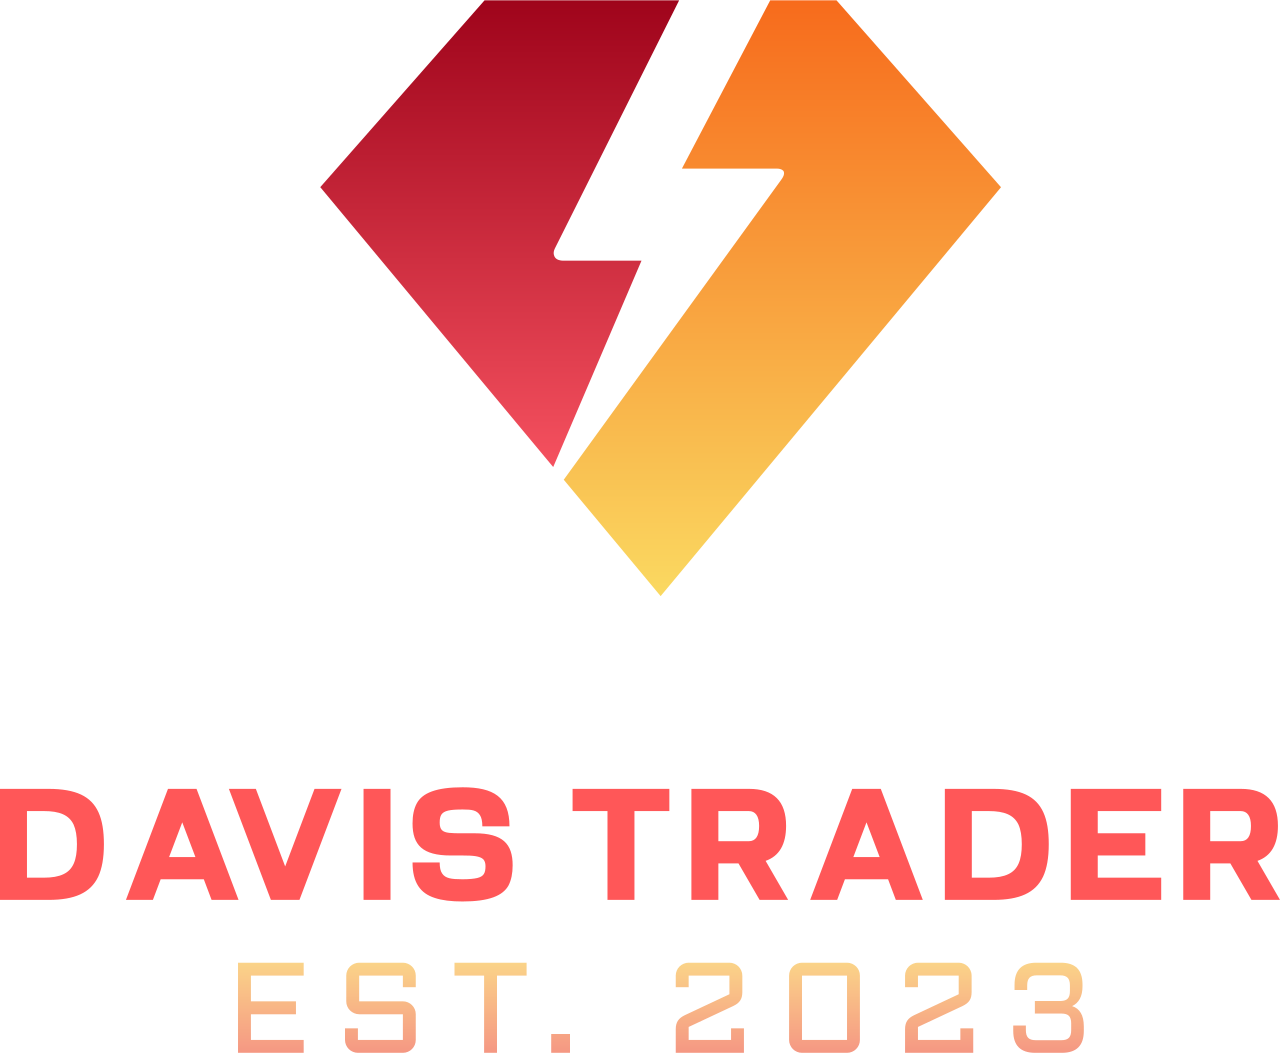 Davis Trader 's logo